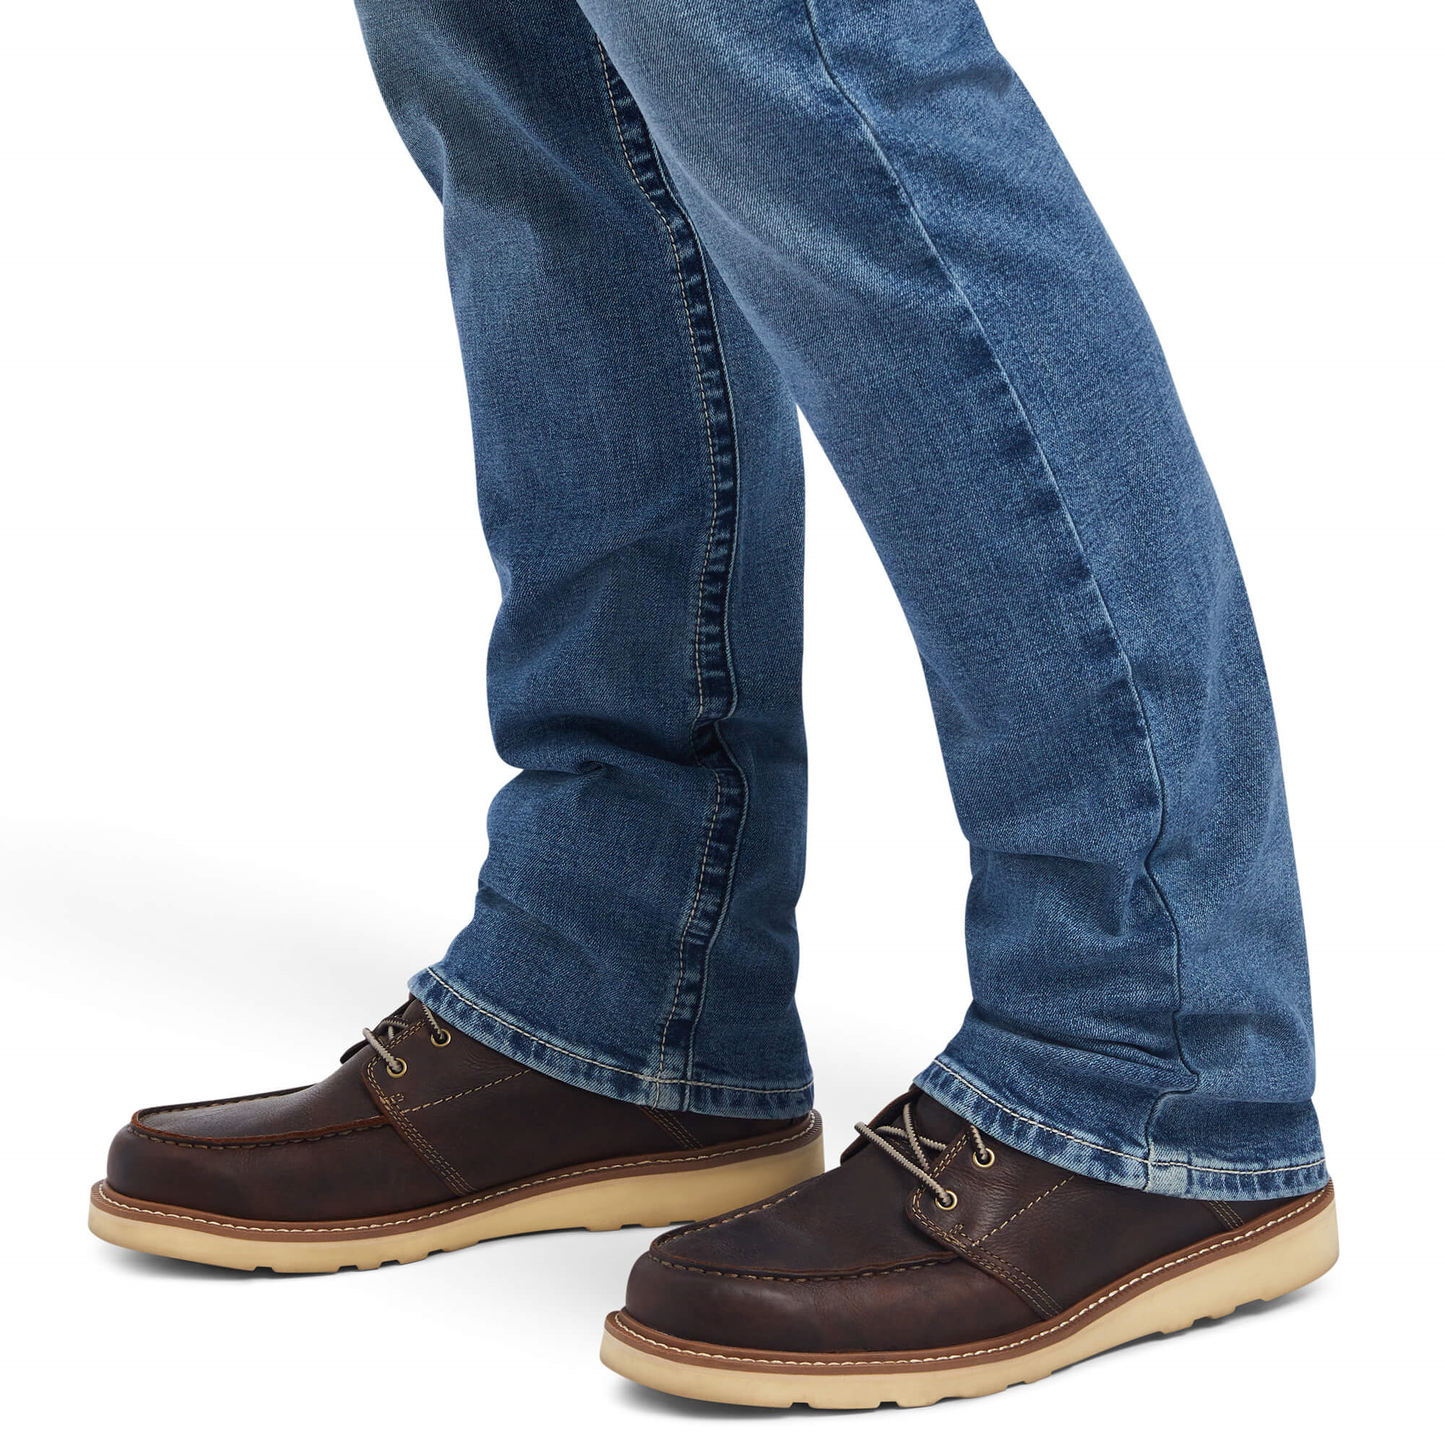 Ariat® Men's M7 Slim Fit Light Wash Straight Leg Jeans